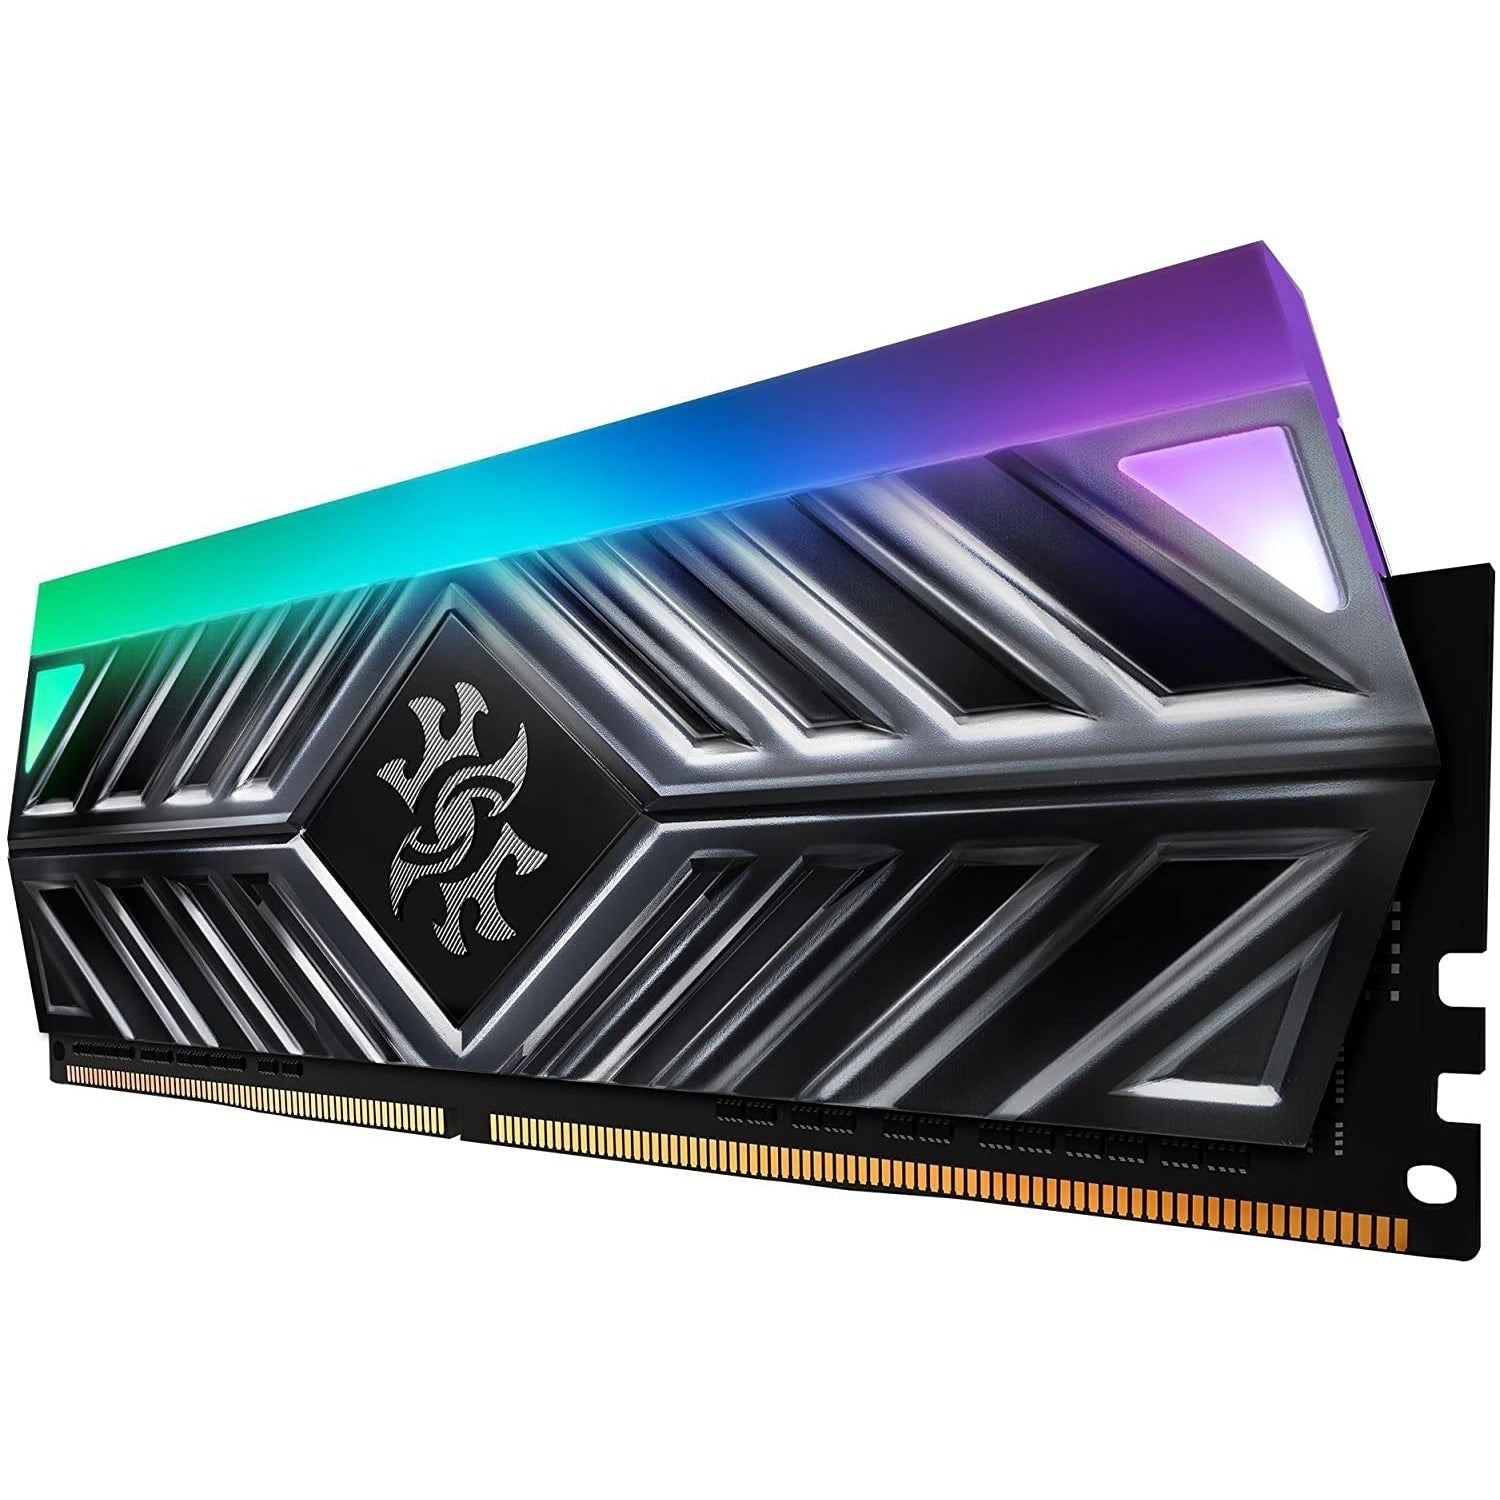 XPG Spectrix D41 8gb RAM DDR4 - OVERCLOCK Computer